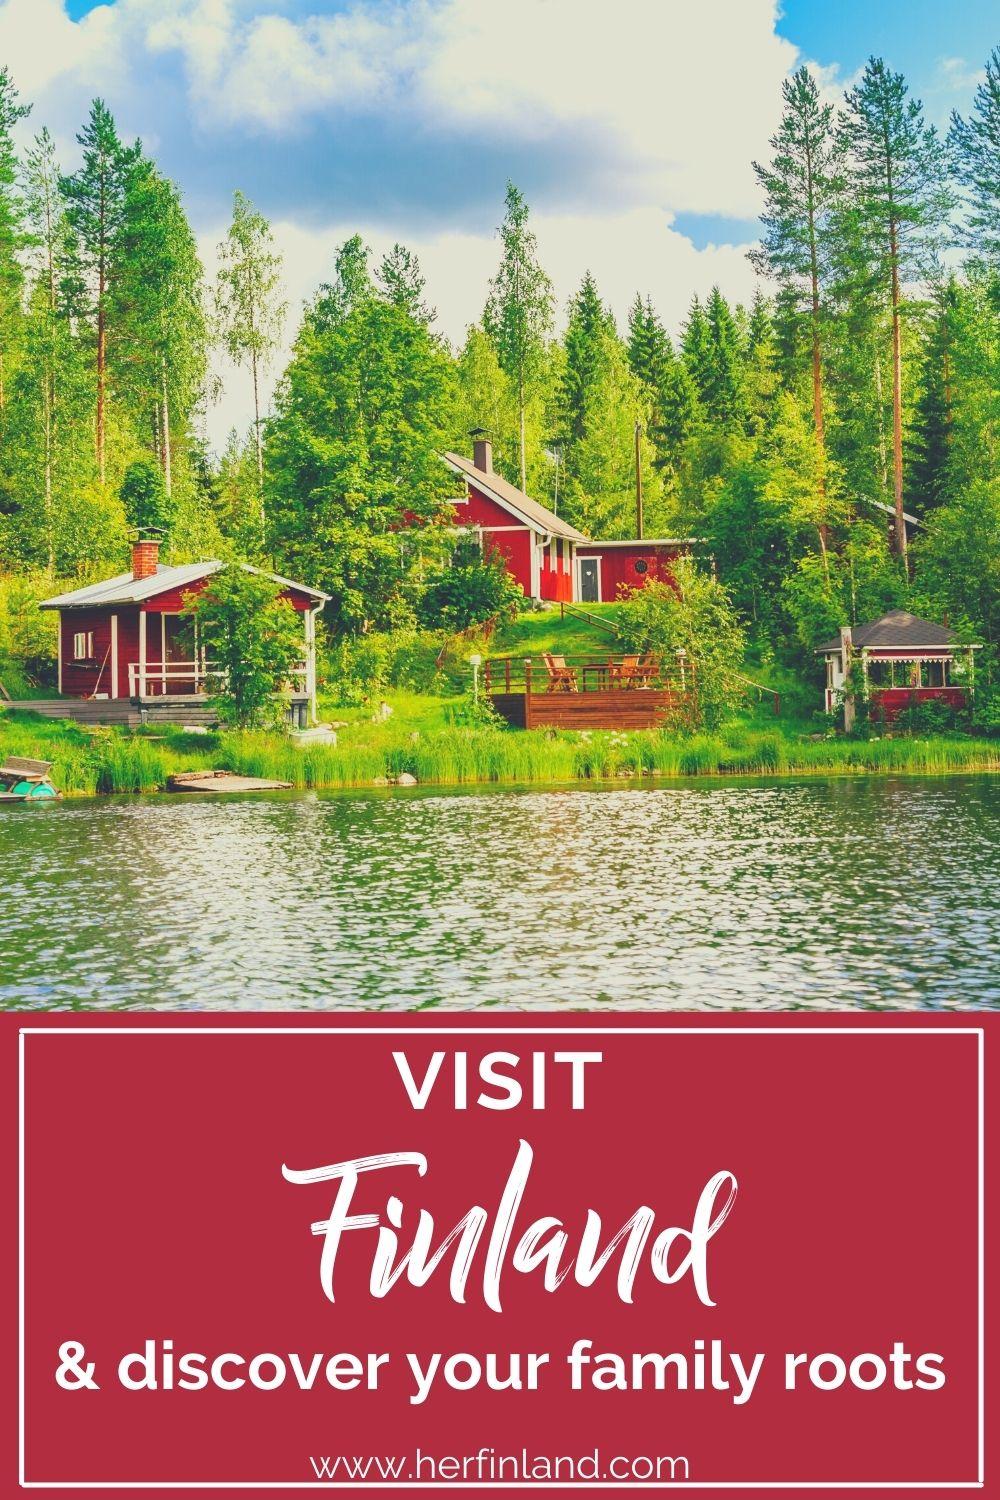 Finland scenery in nature